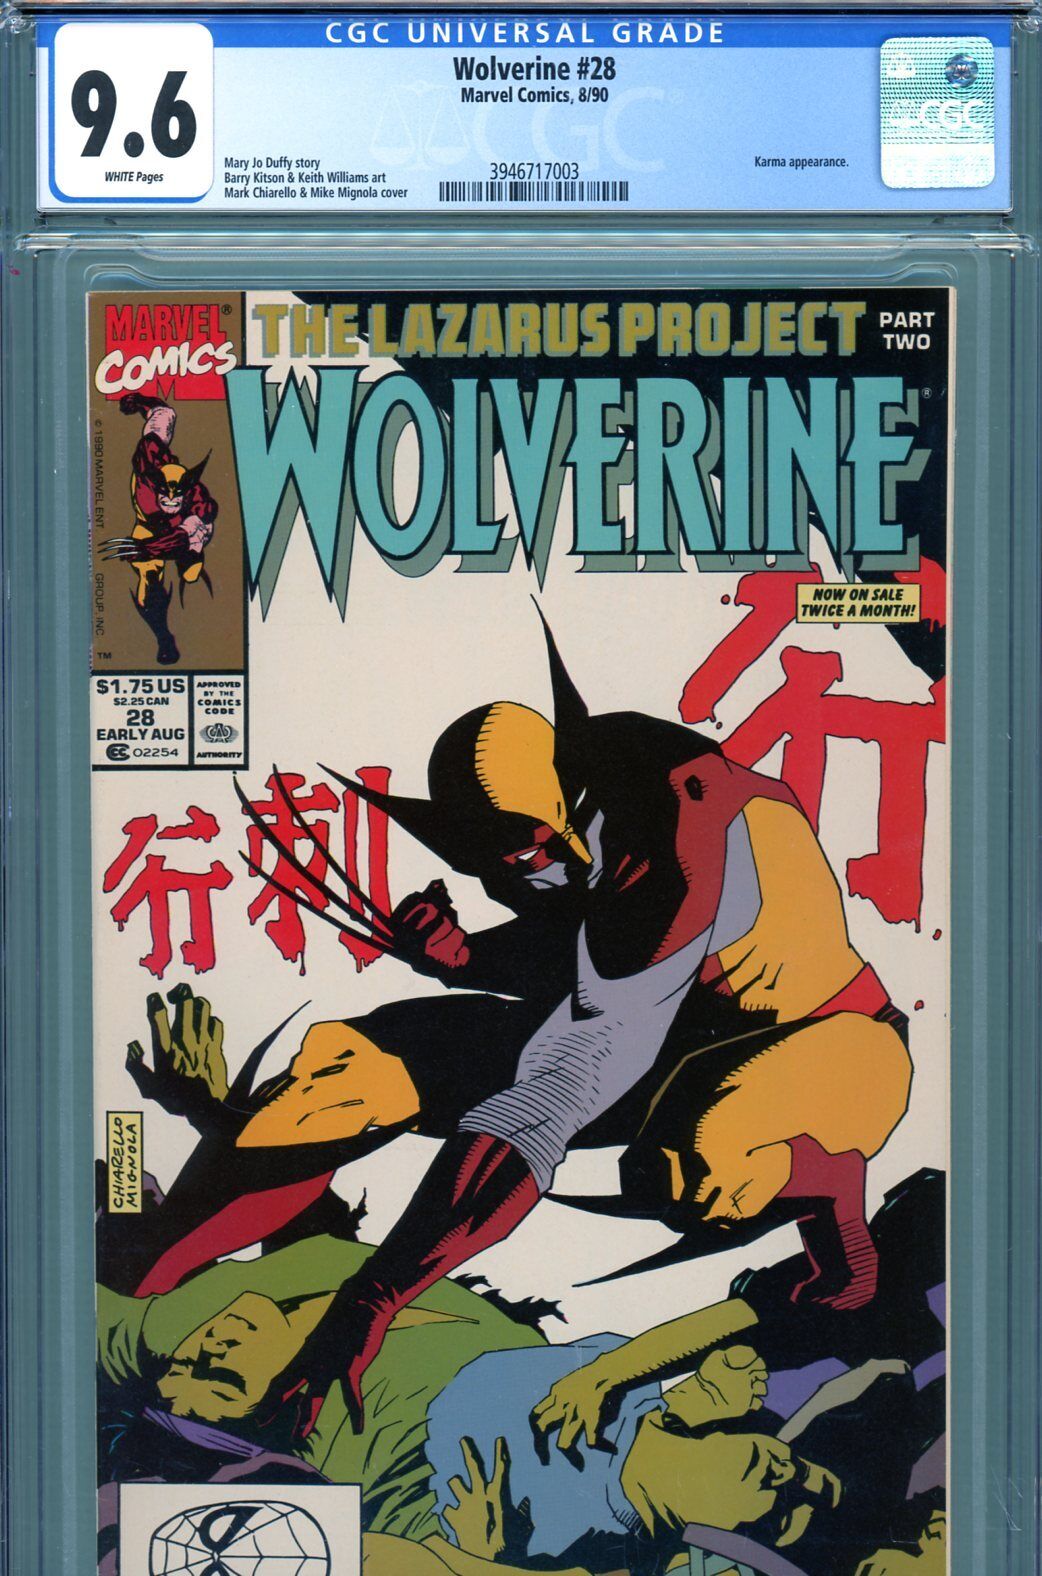 Wolverine #28 CGC GRADED 9.6 - Karma app. - Mignola cover - 2nd highest graded